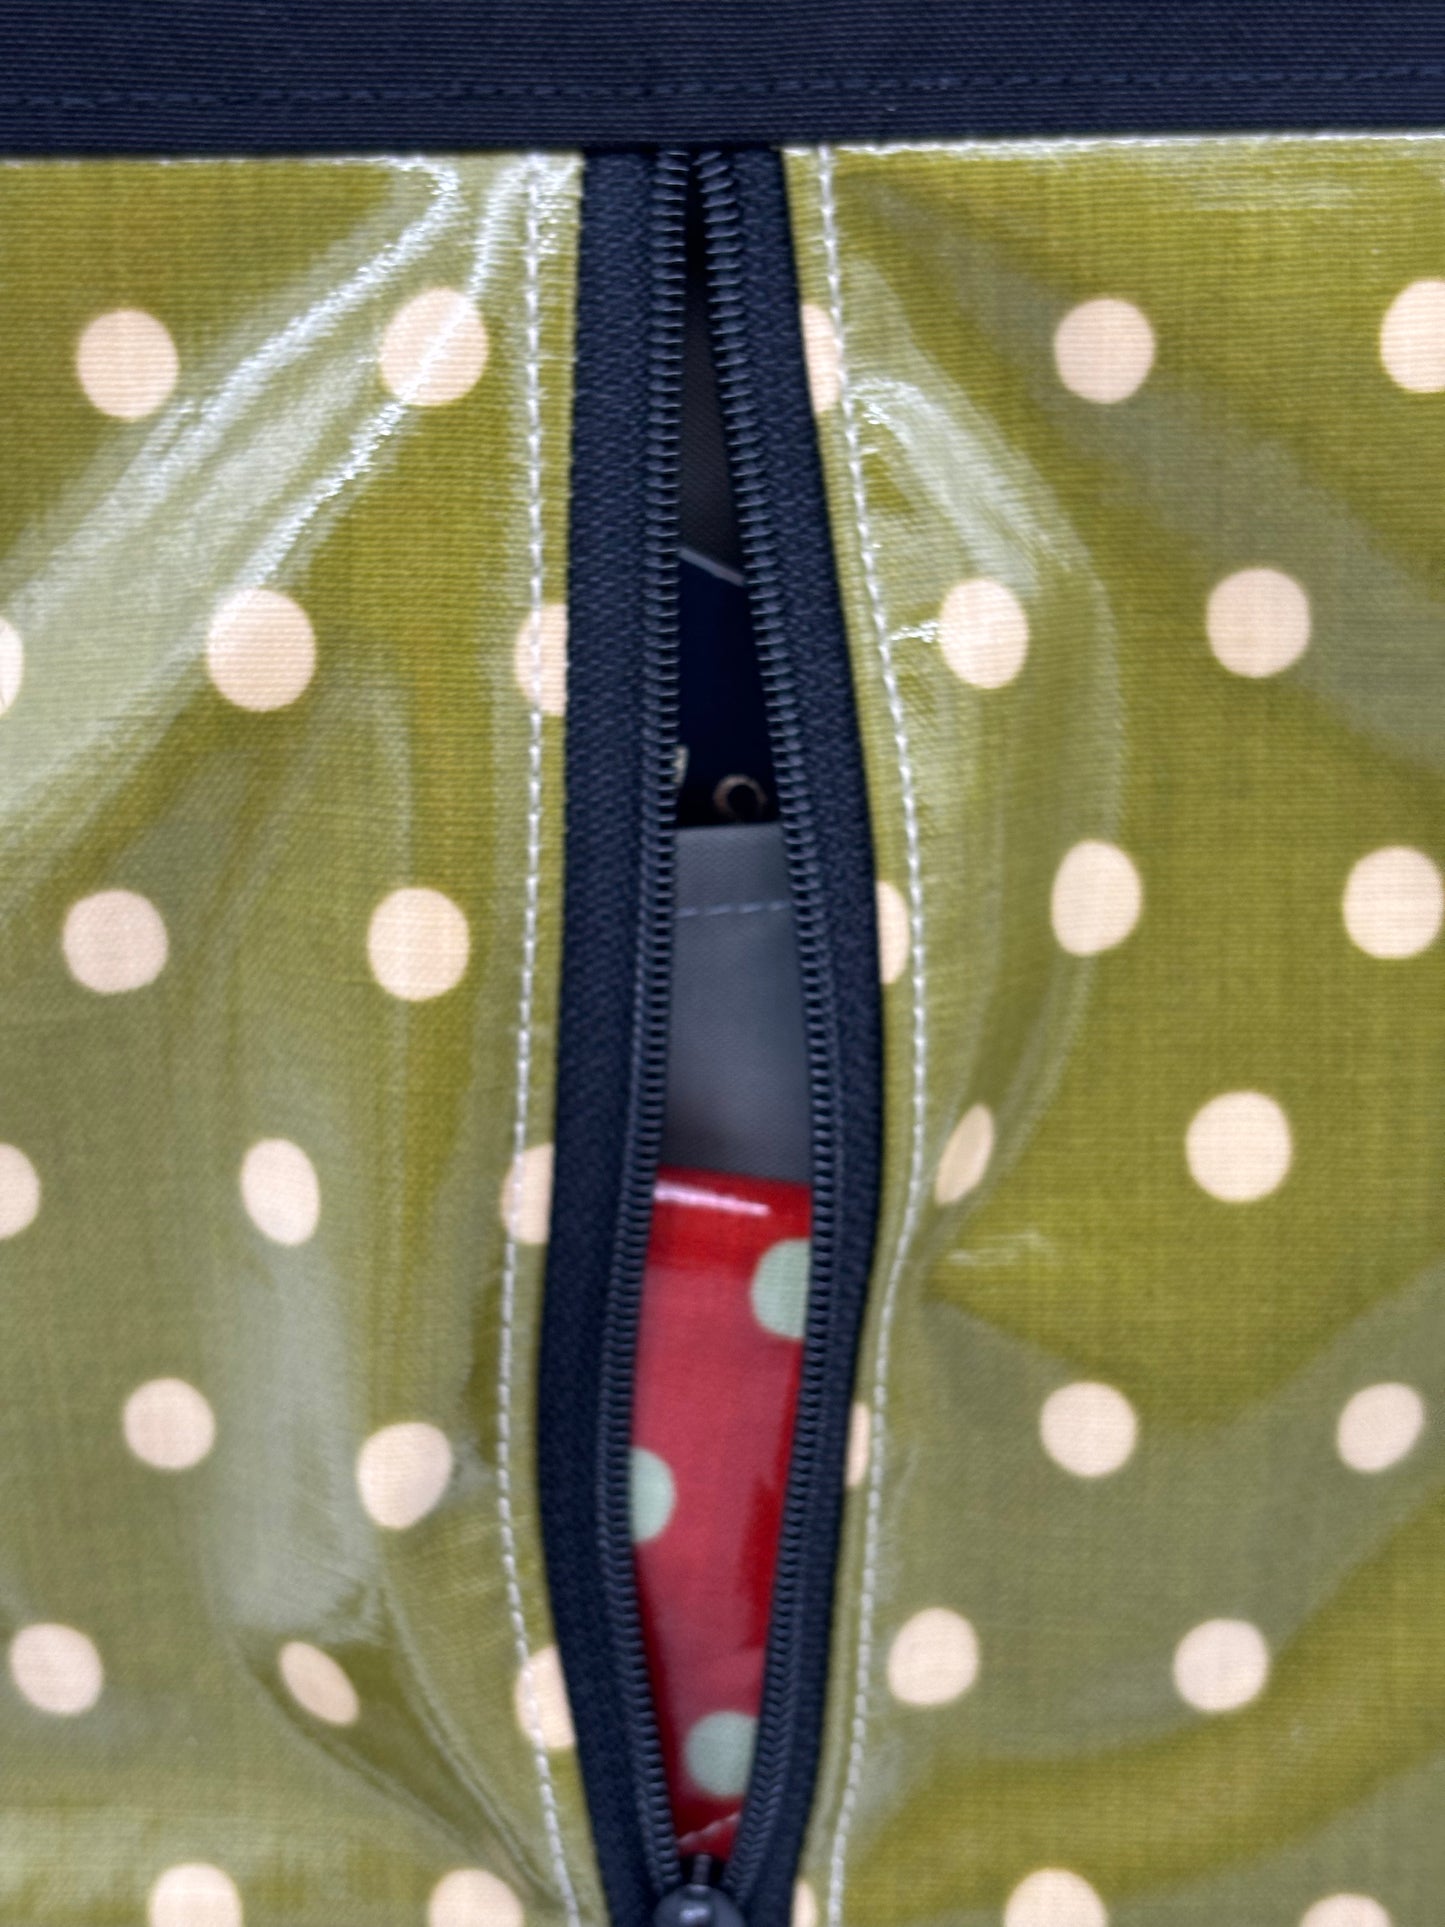 Backpack/Crossbody in Mossy Green Polka Dots